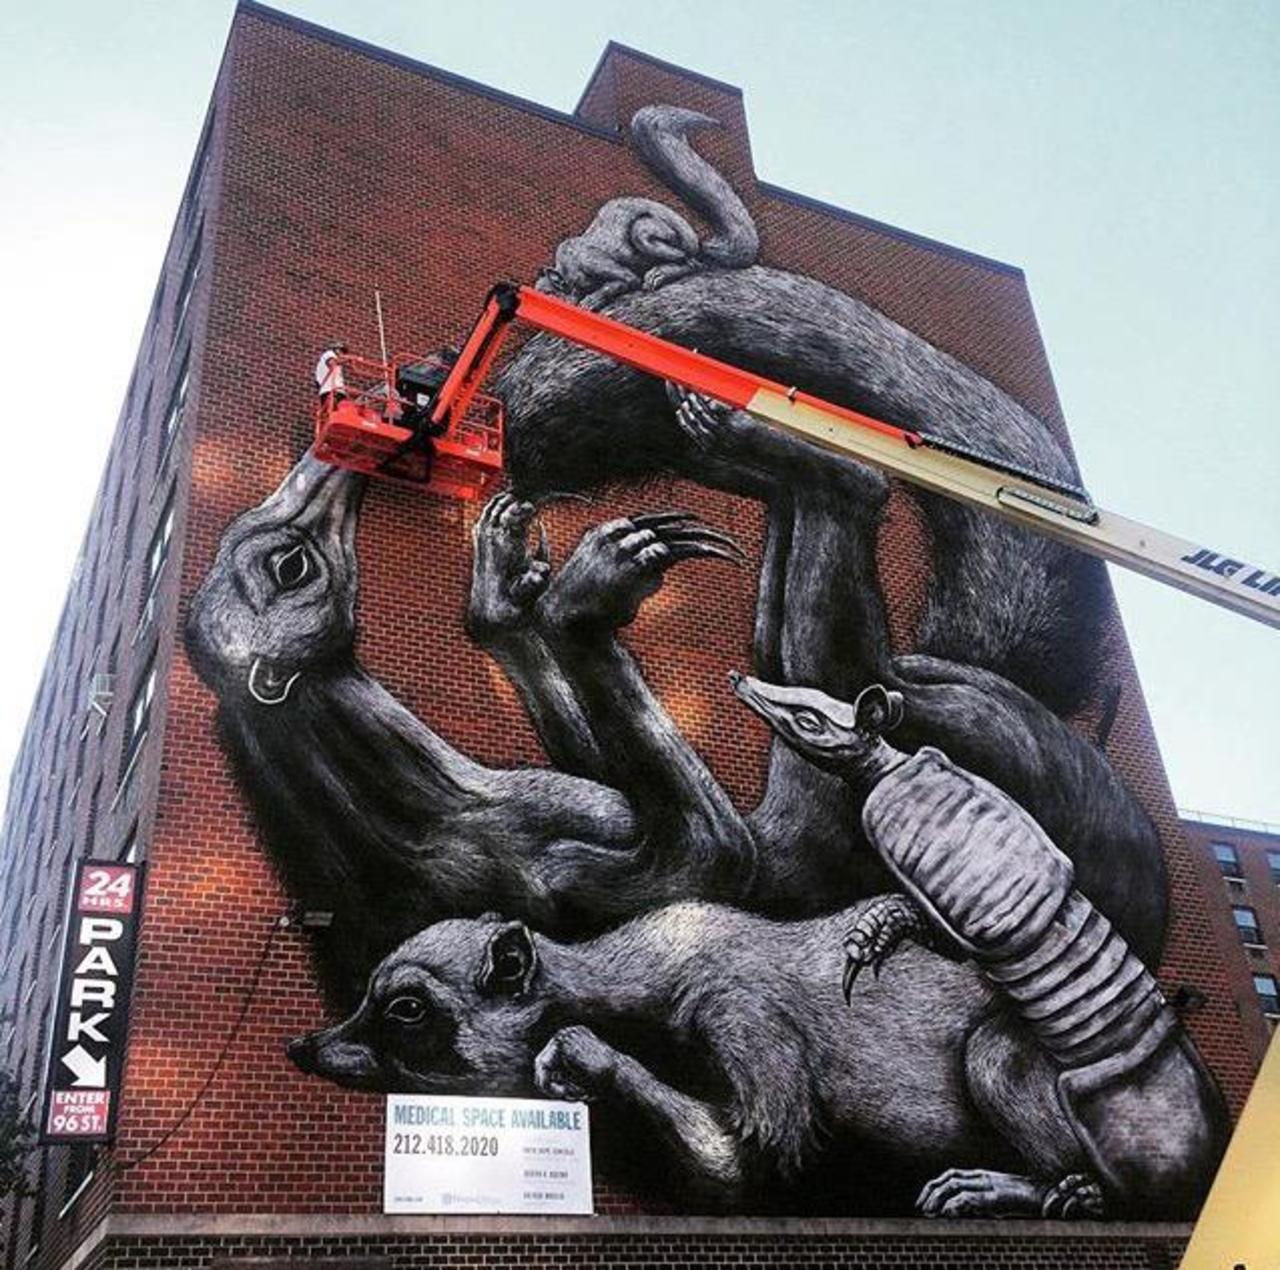 Street Art in progress by ROA in NYC

#art #graffiti #mural #streetart http://t.co/iGCmfhyhVr